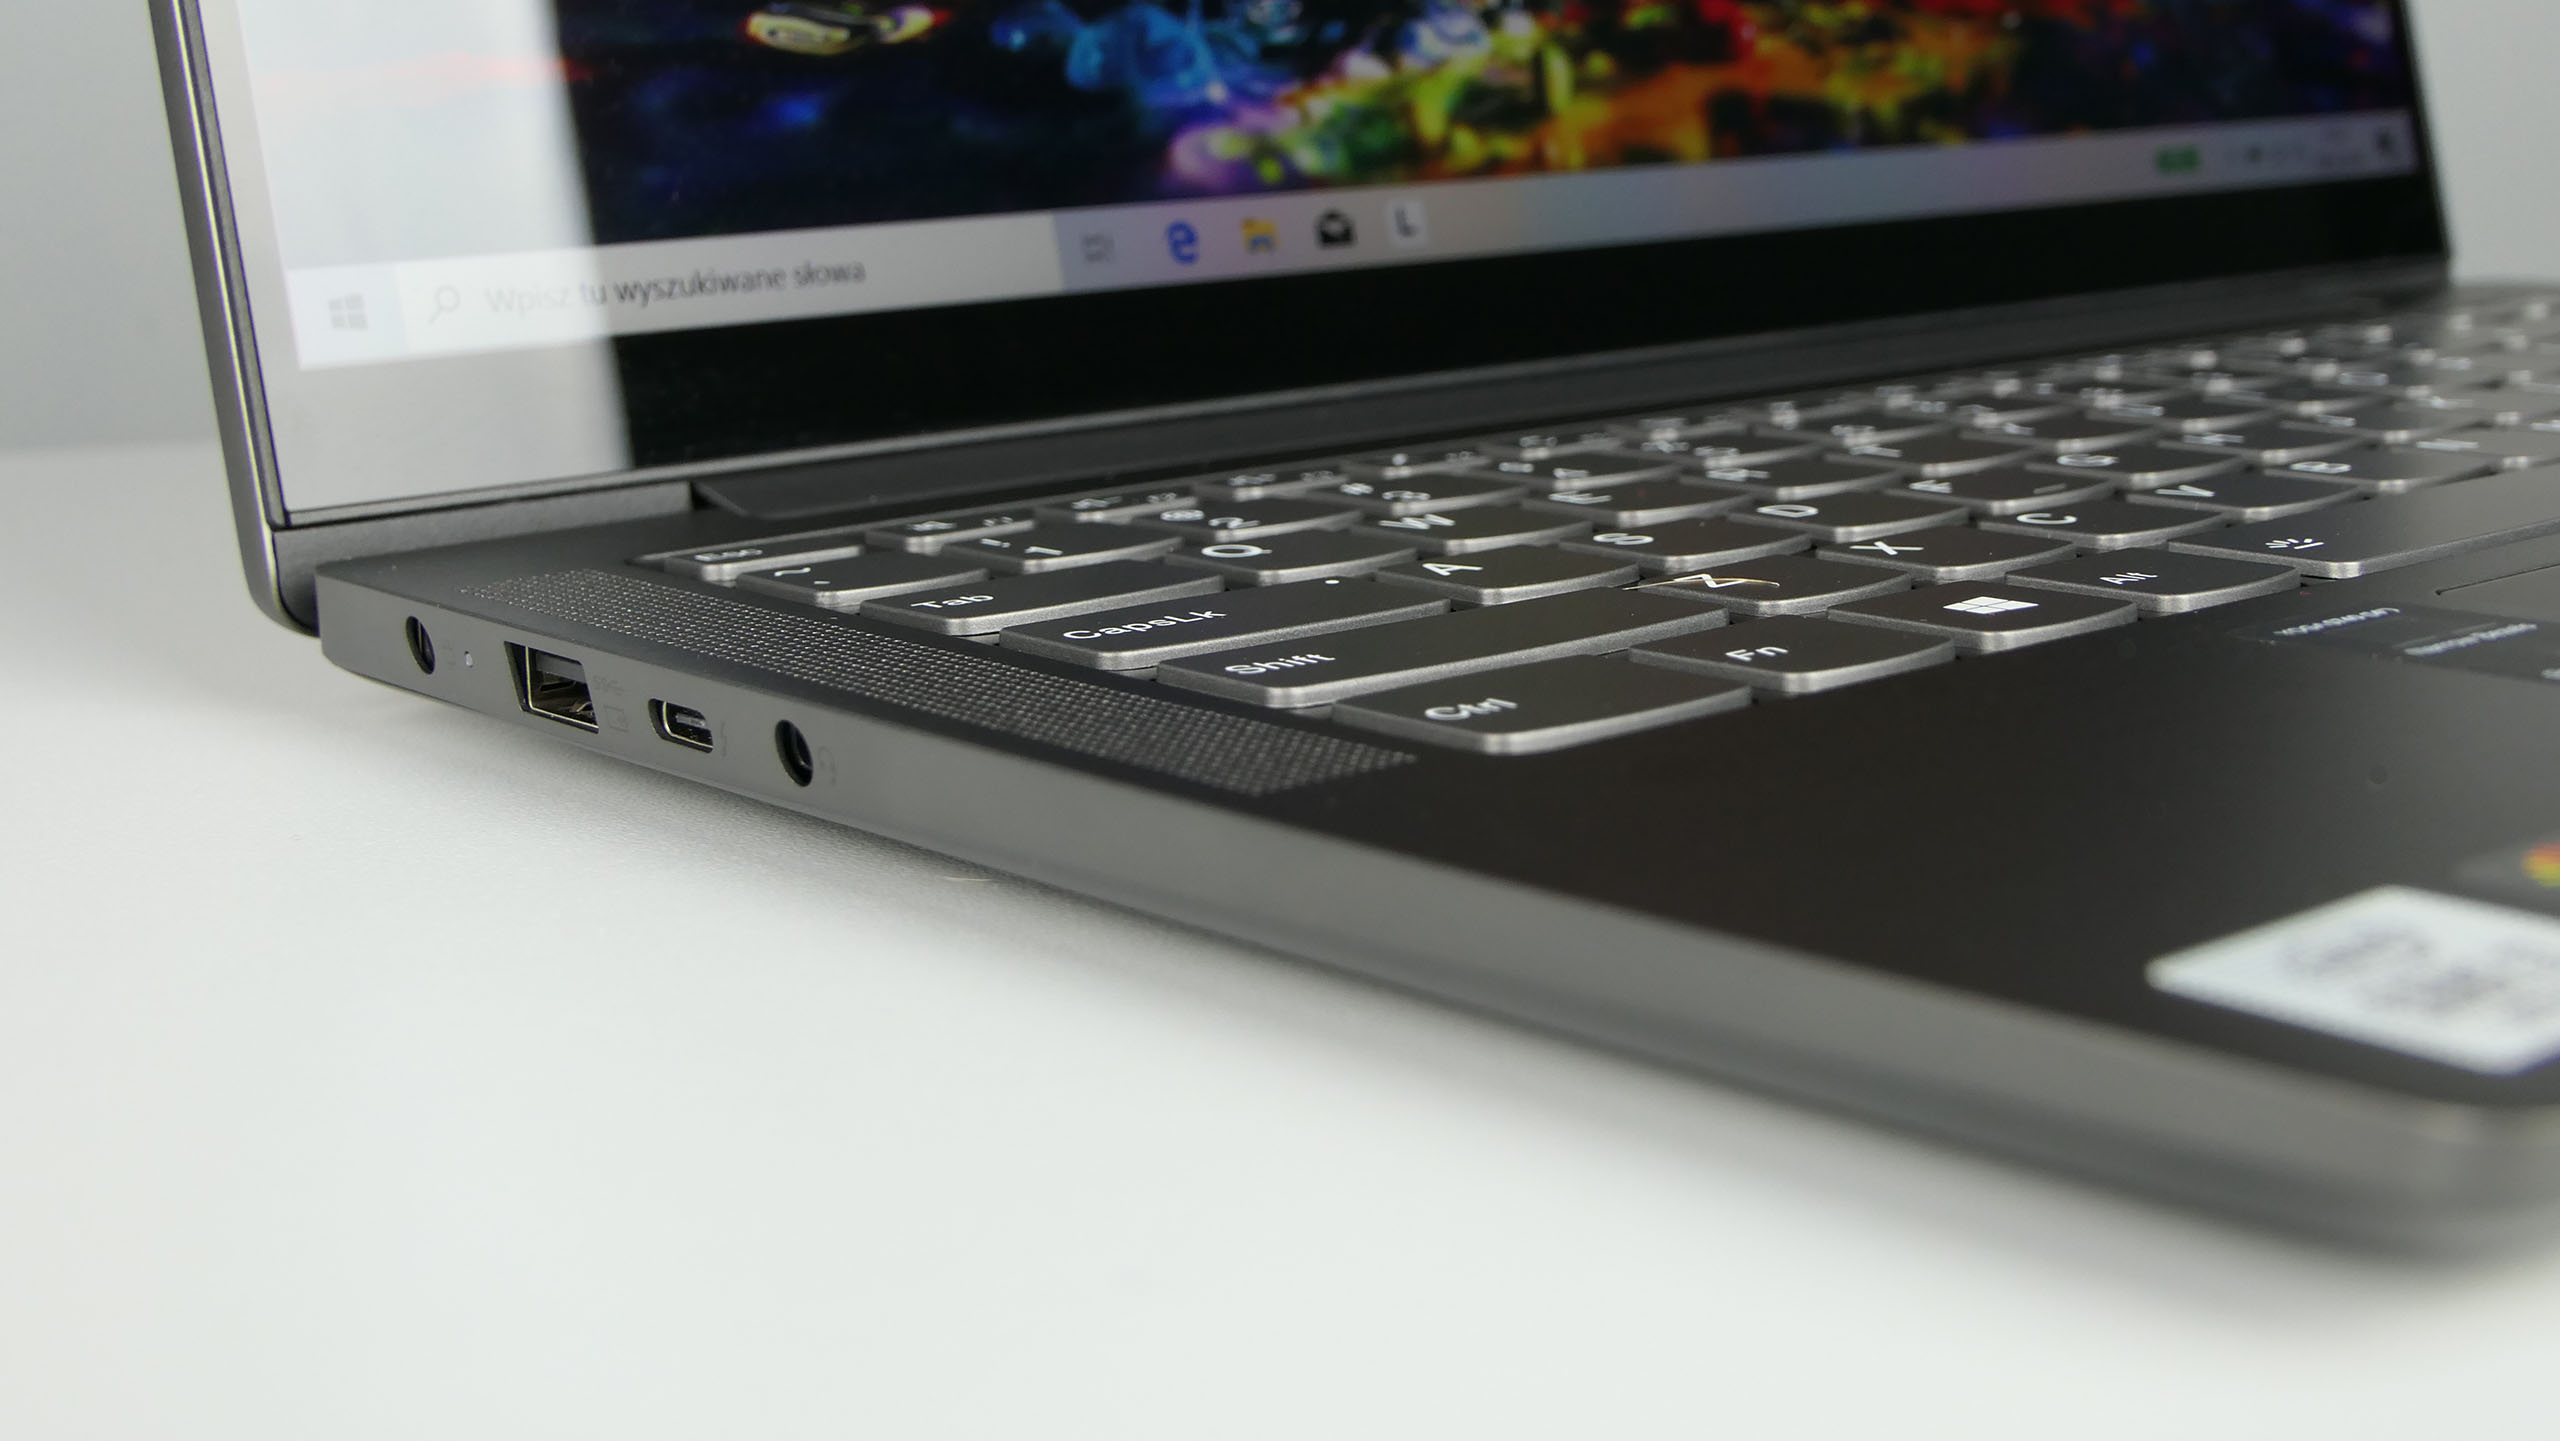 Lenovo Yoga S740 (14) - zasilanie, USB typu A, Thunderbolt 3 i gniazdo audio